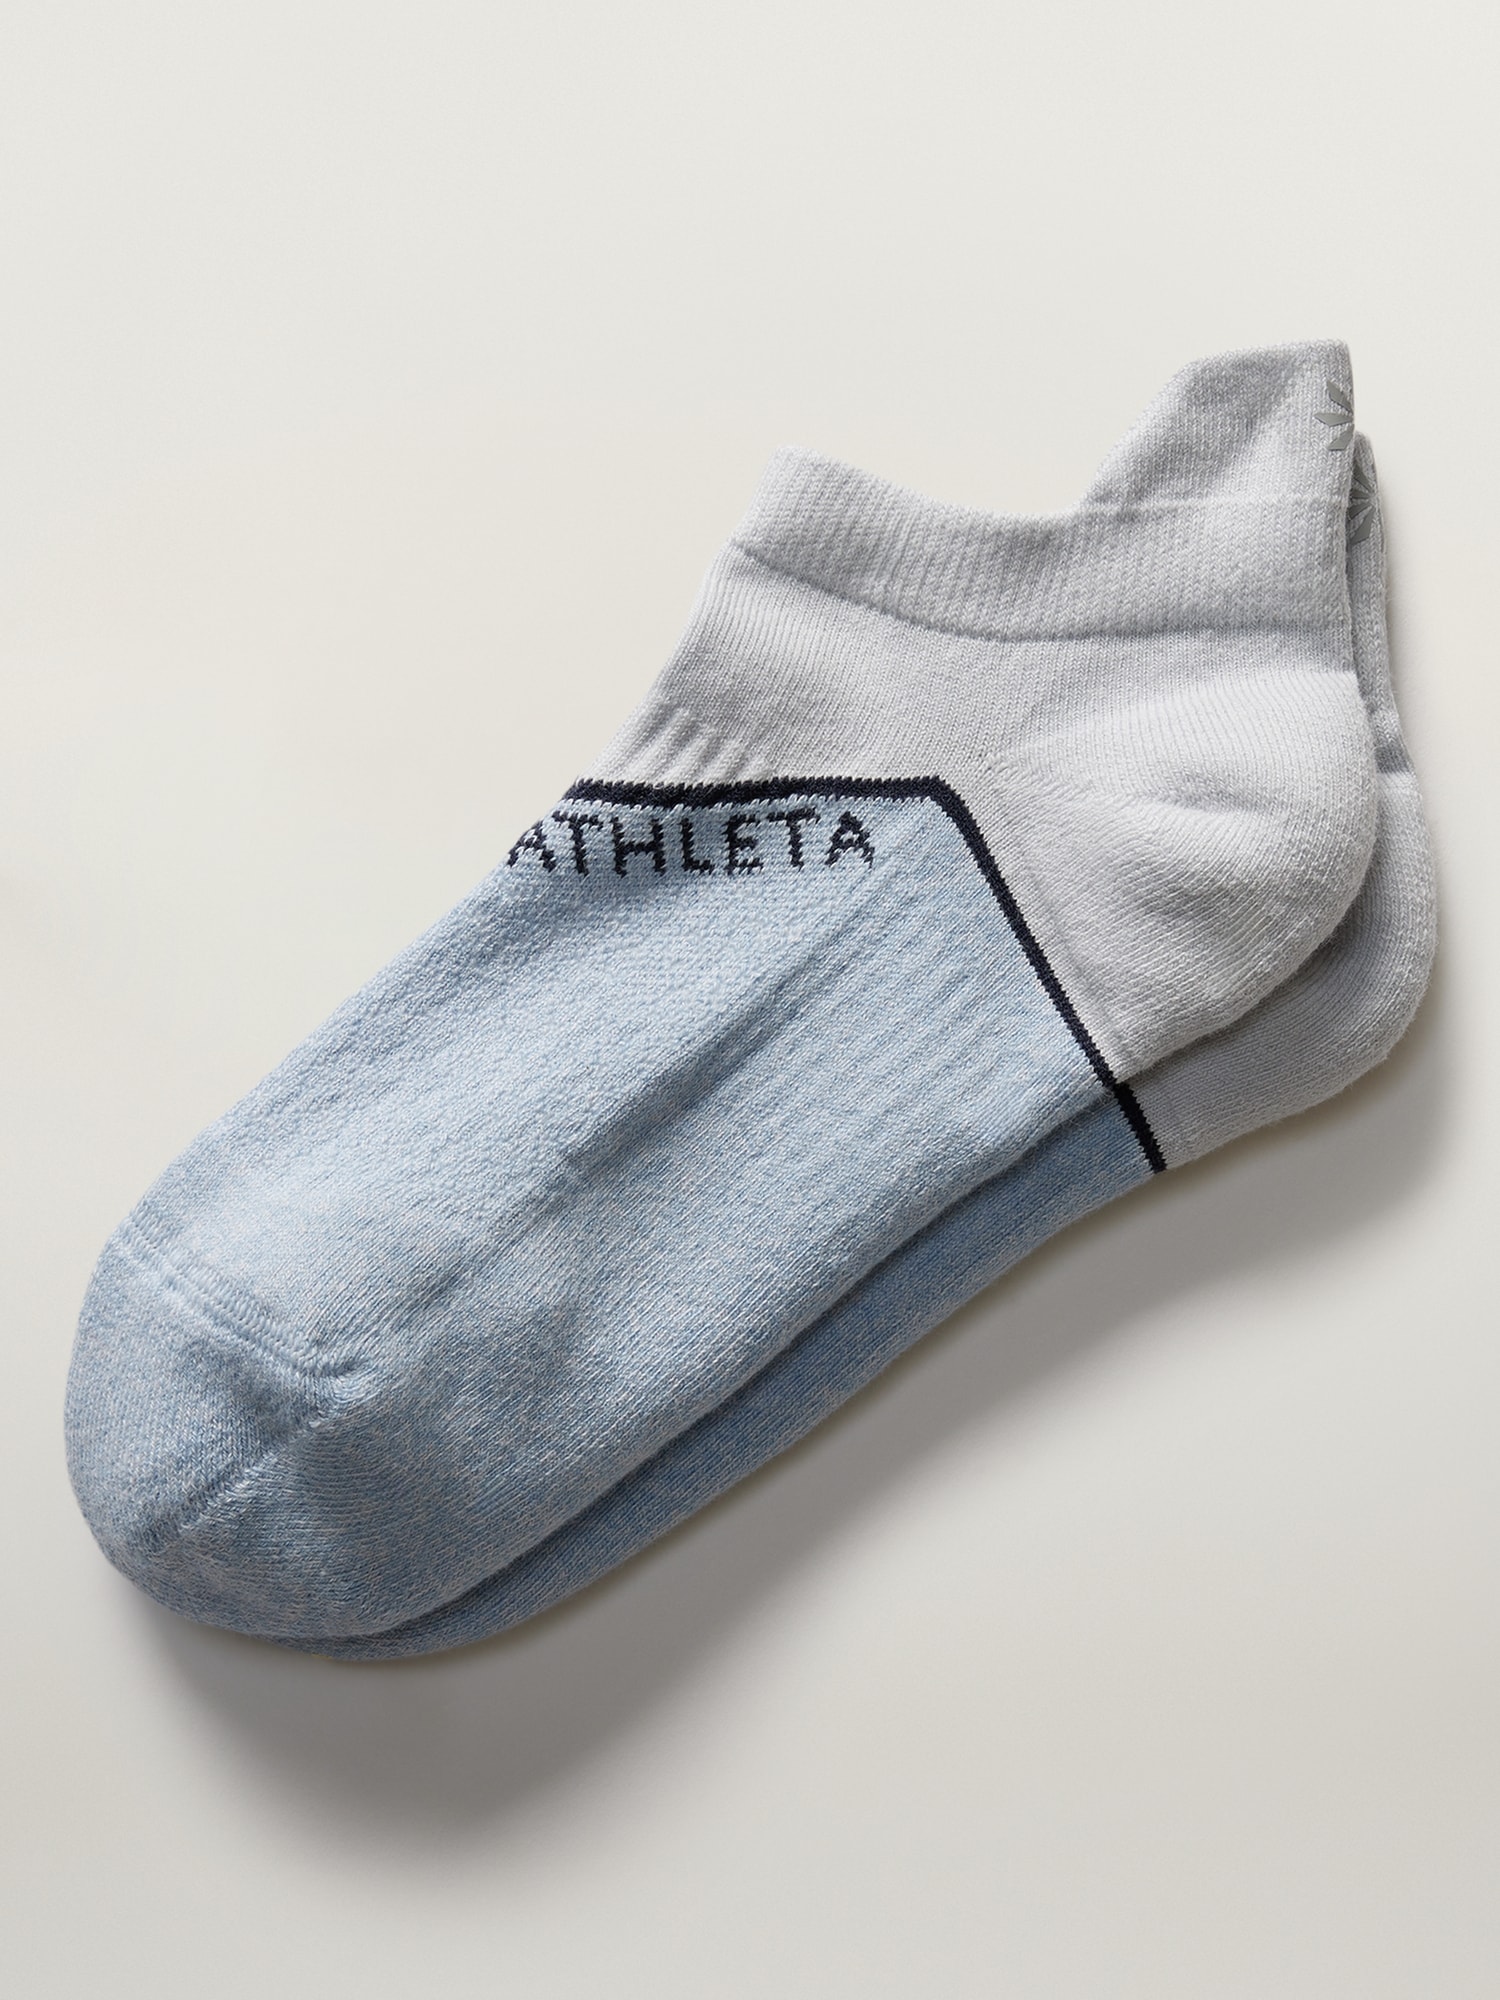 Athleta Everyday Ankle Sock In Snowfall Blue